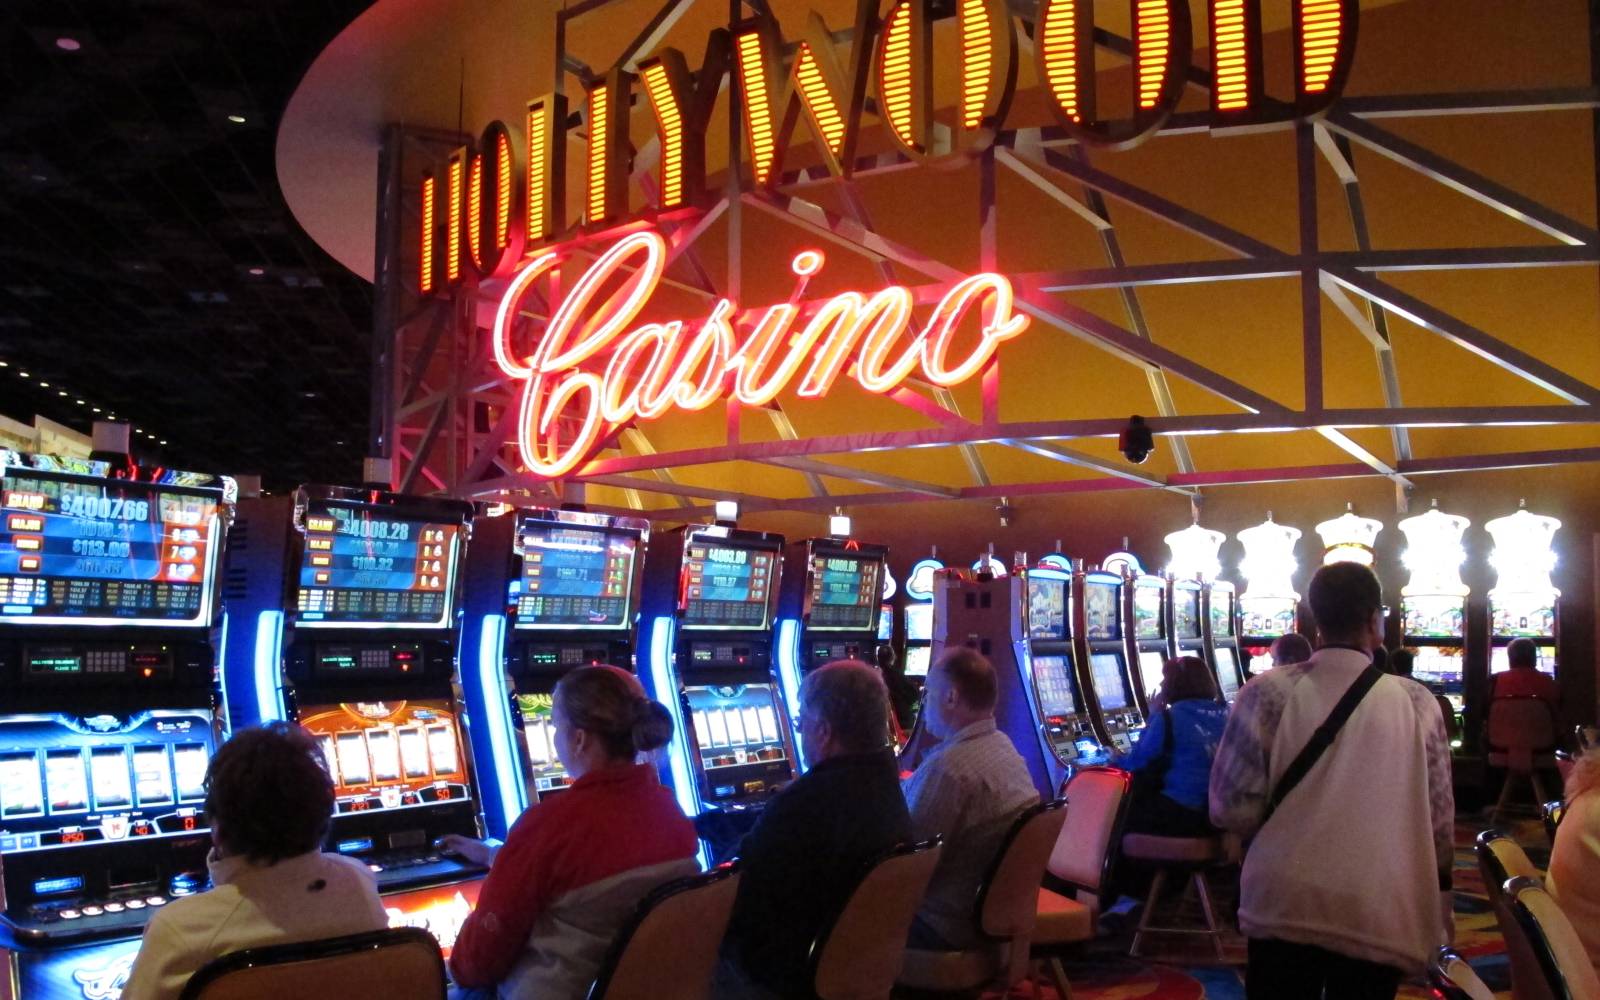 People are gambling in casino.